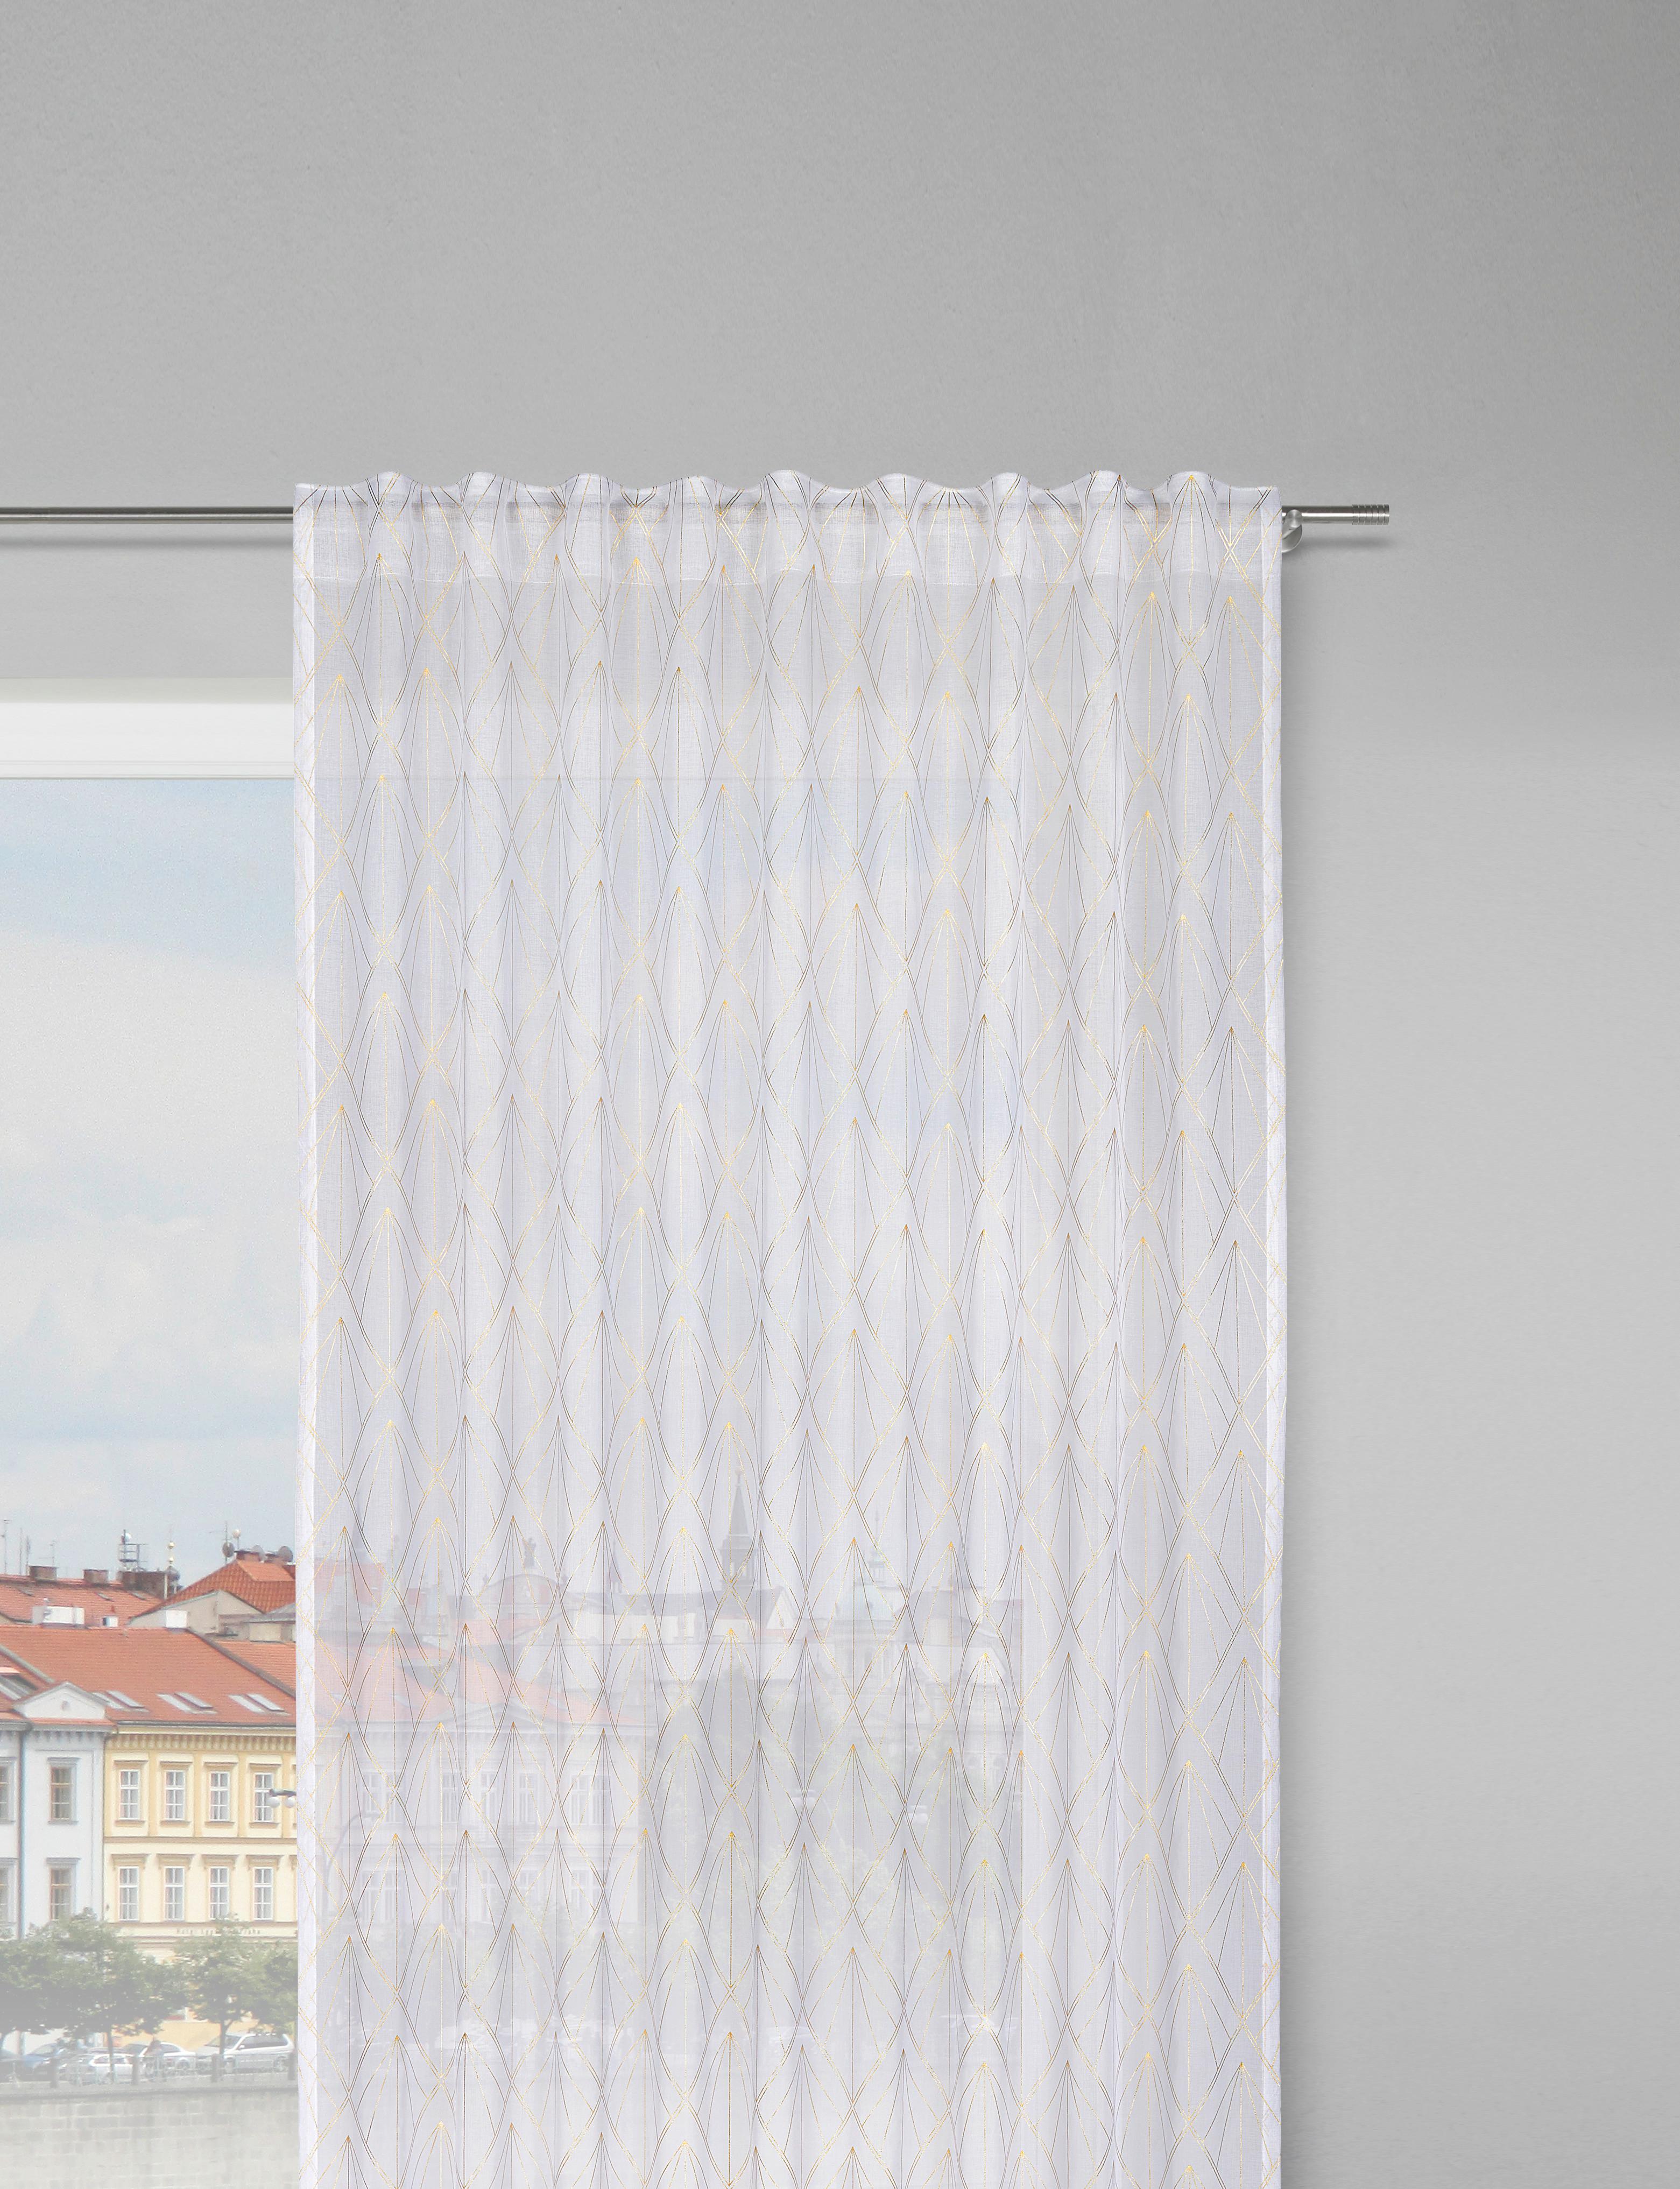 GOTOVA ZAVJESA ESTHER - bijela/zlatne boje, Romantik / Landhaus, tekstil (135/245cm) - Modern Living